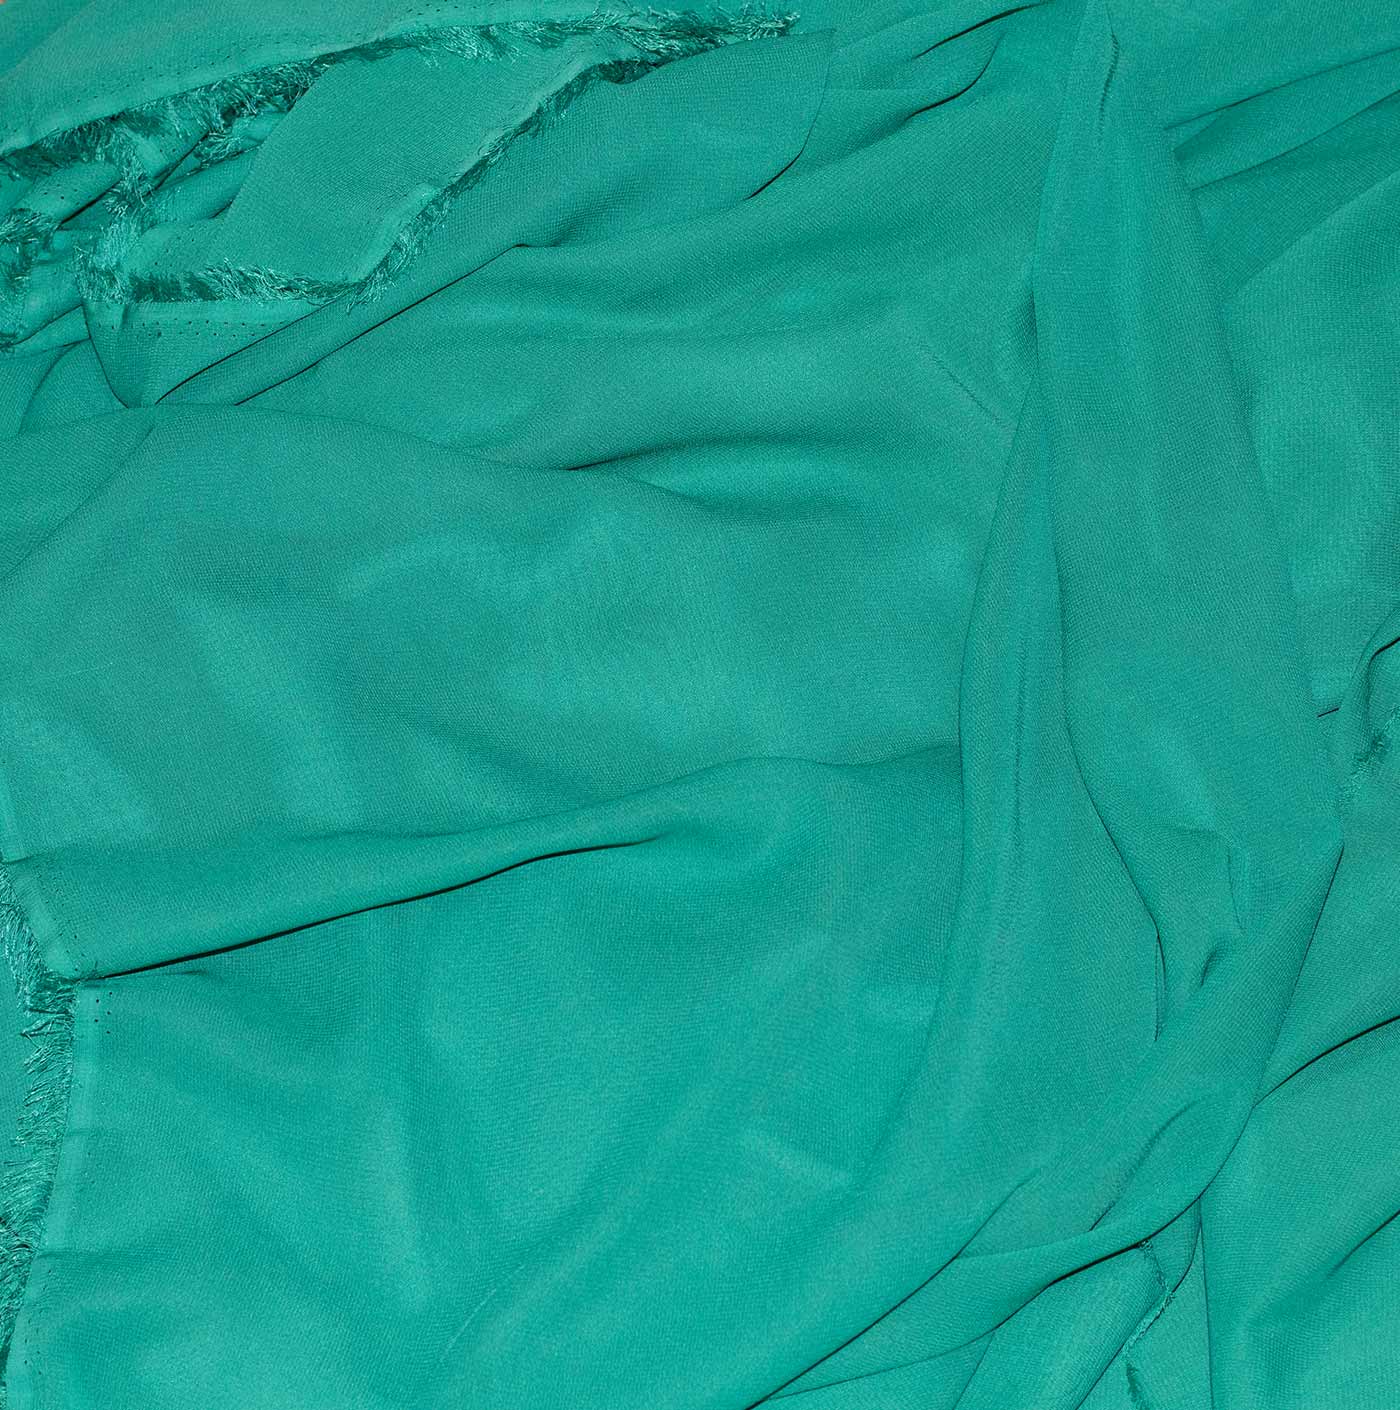 Green Plain Chiffon Fabric